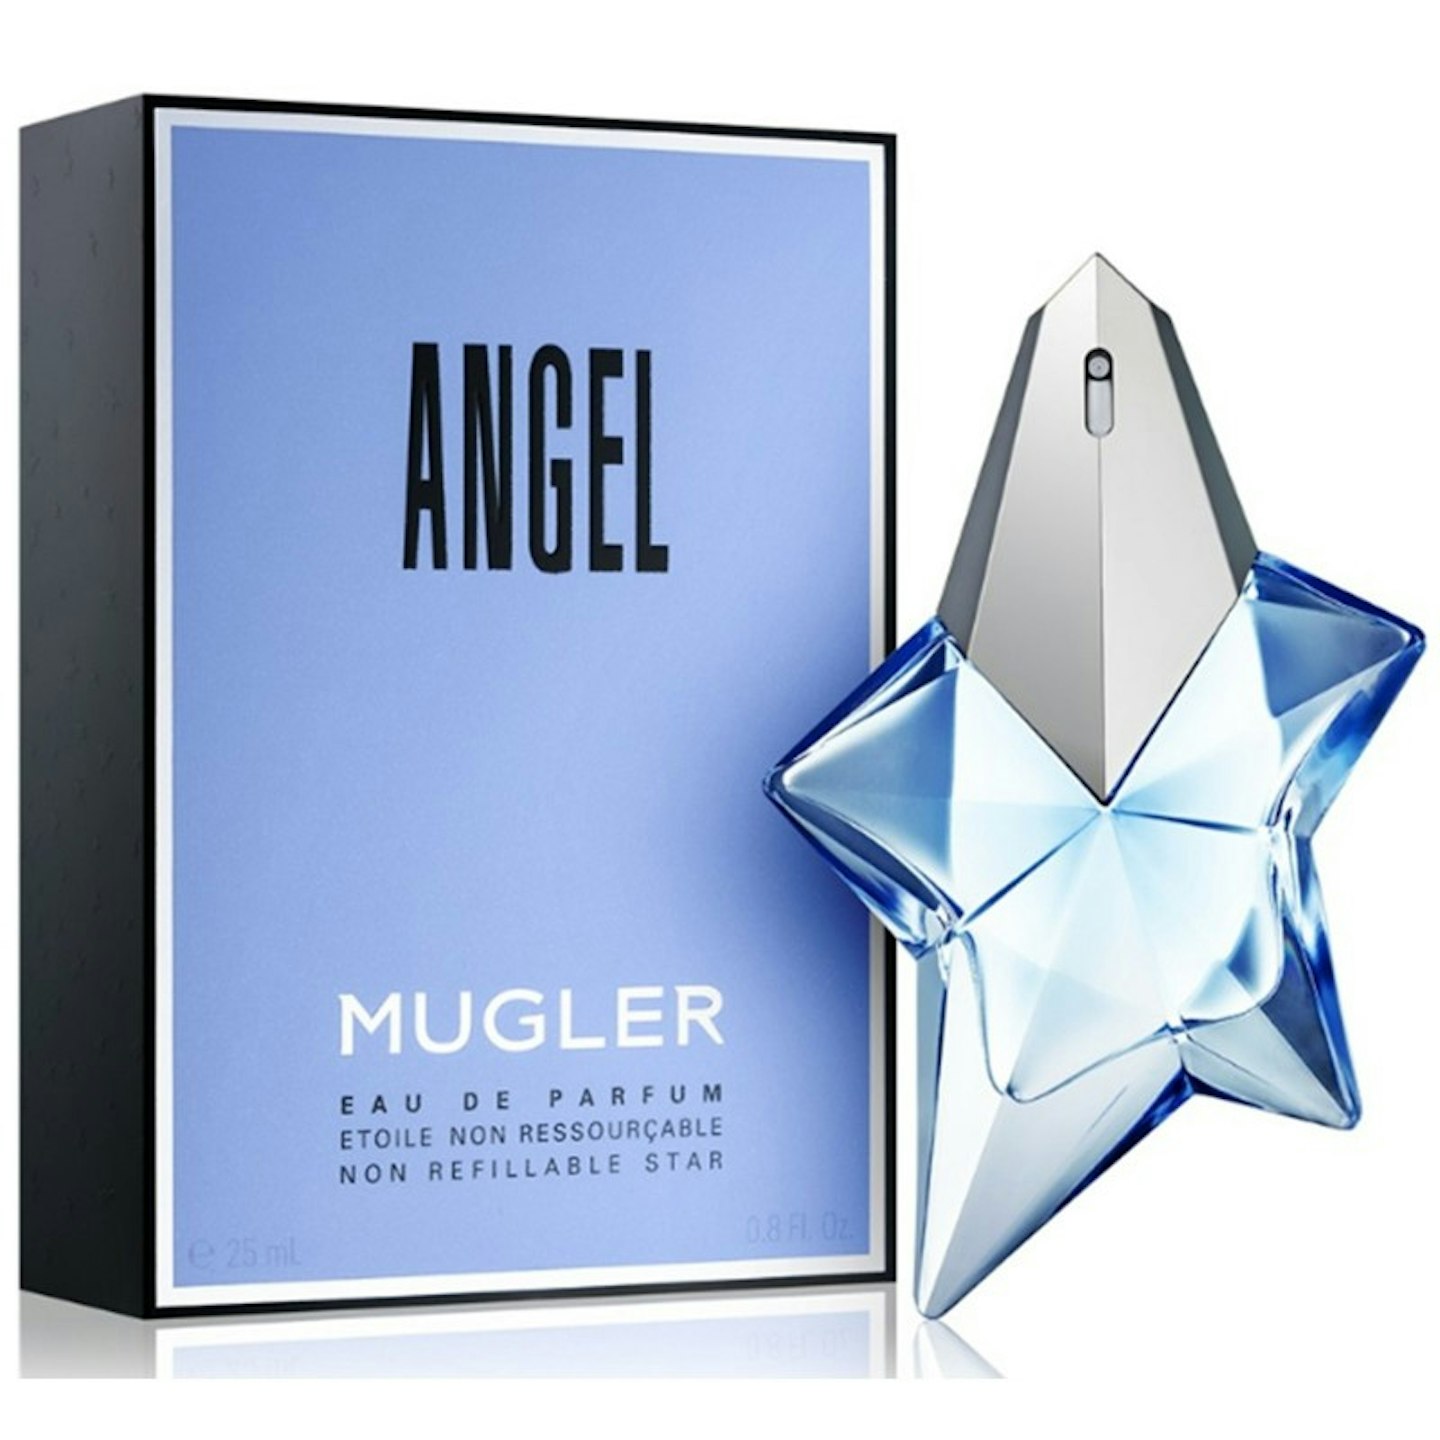 Angel by Thierry Mugler 50ml, £62